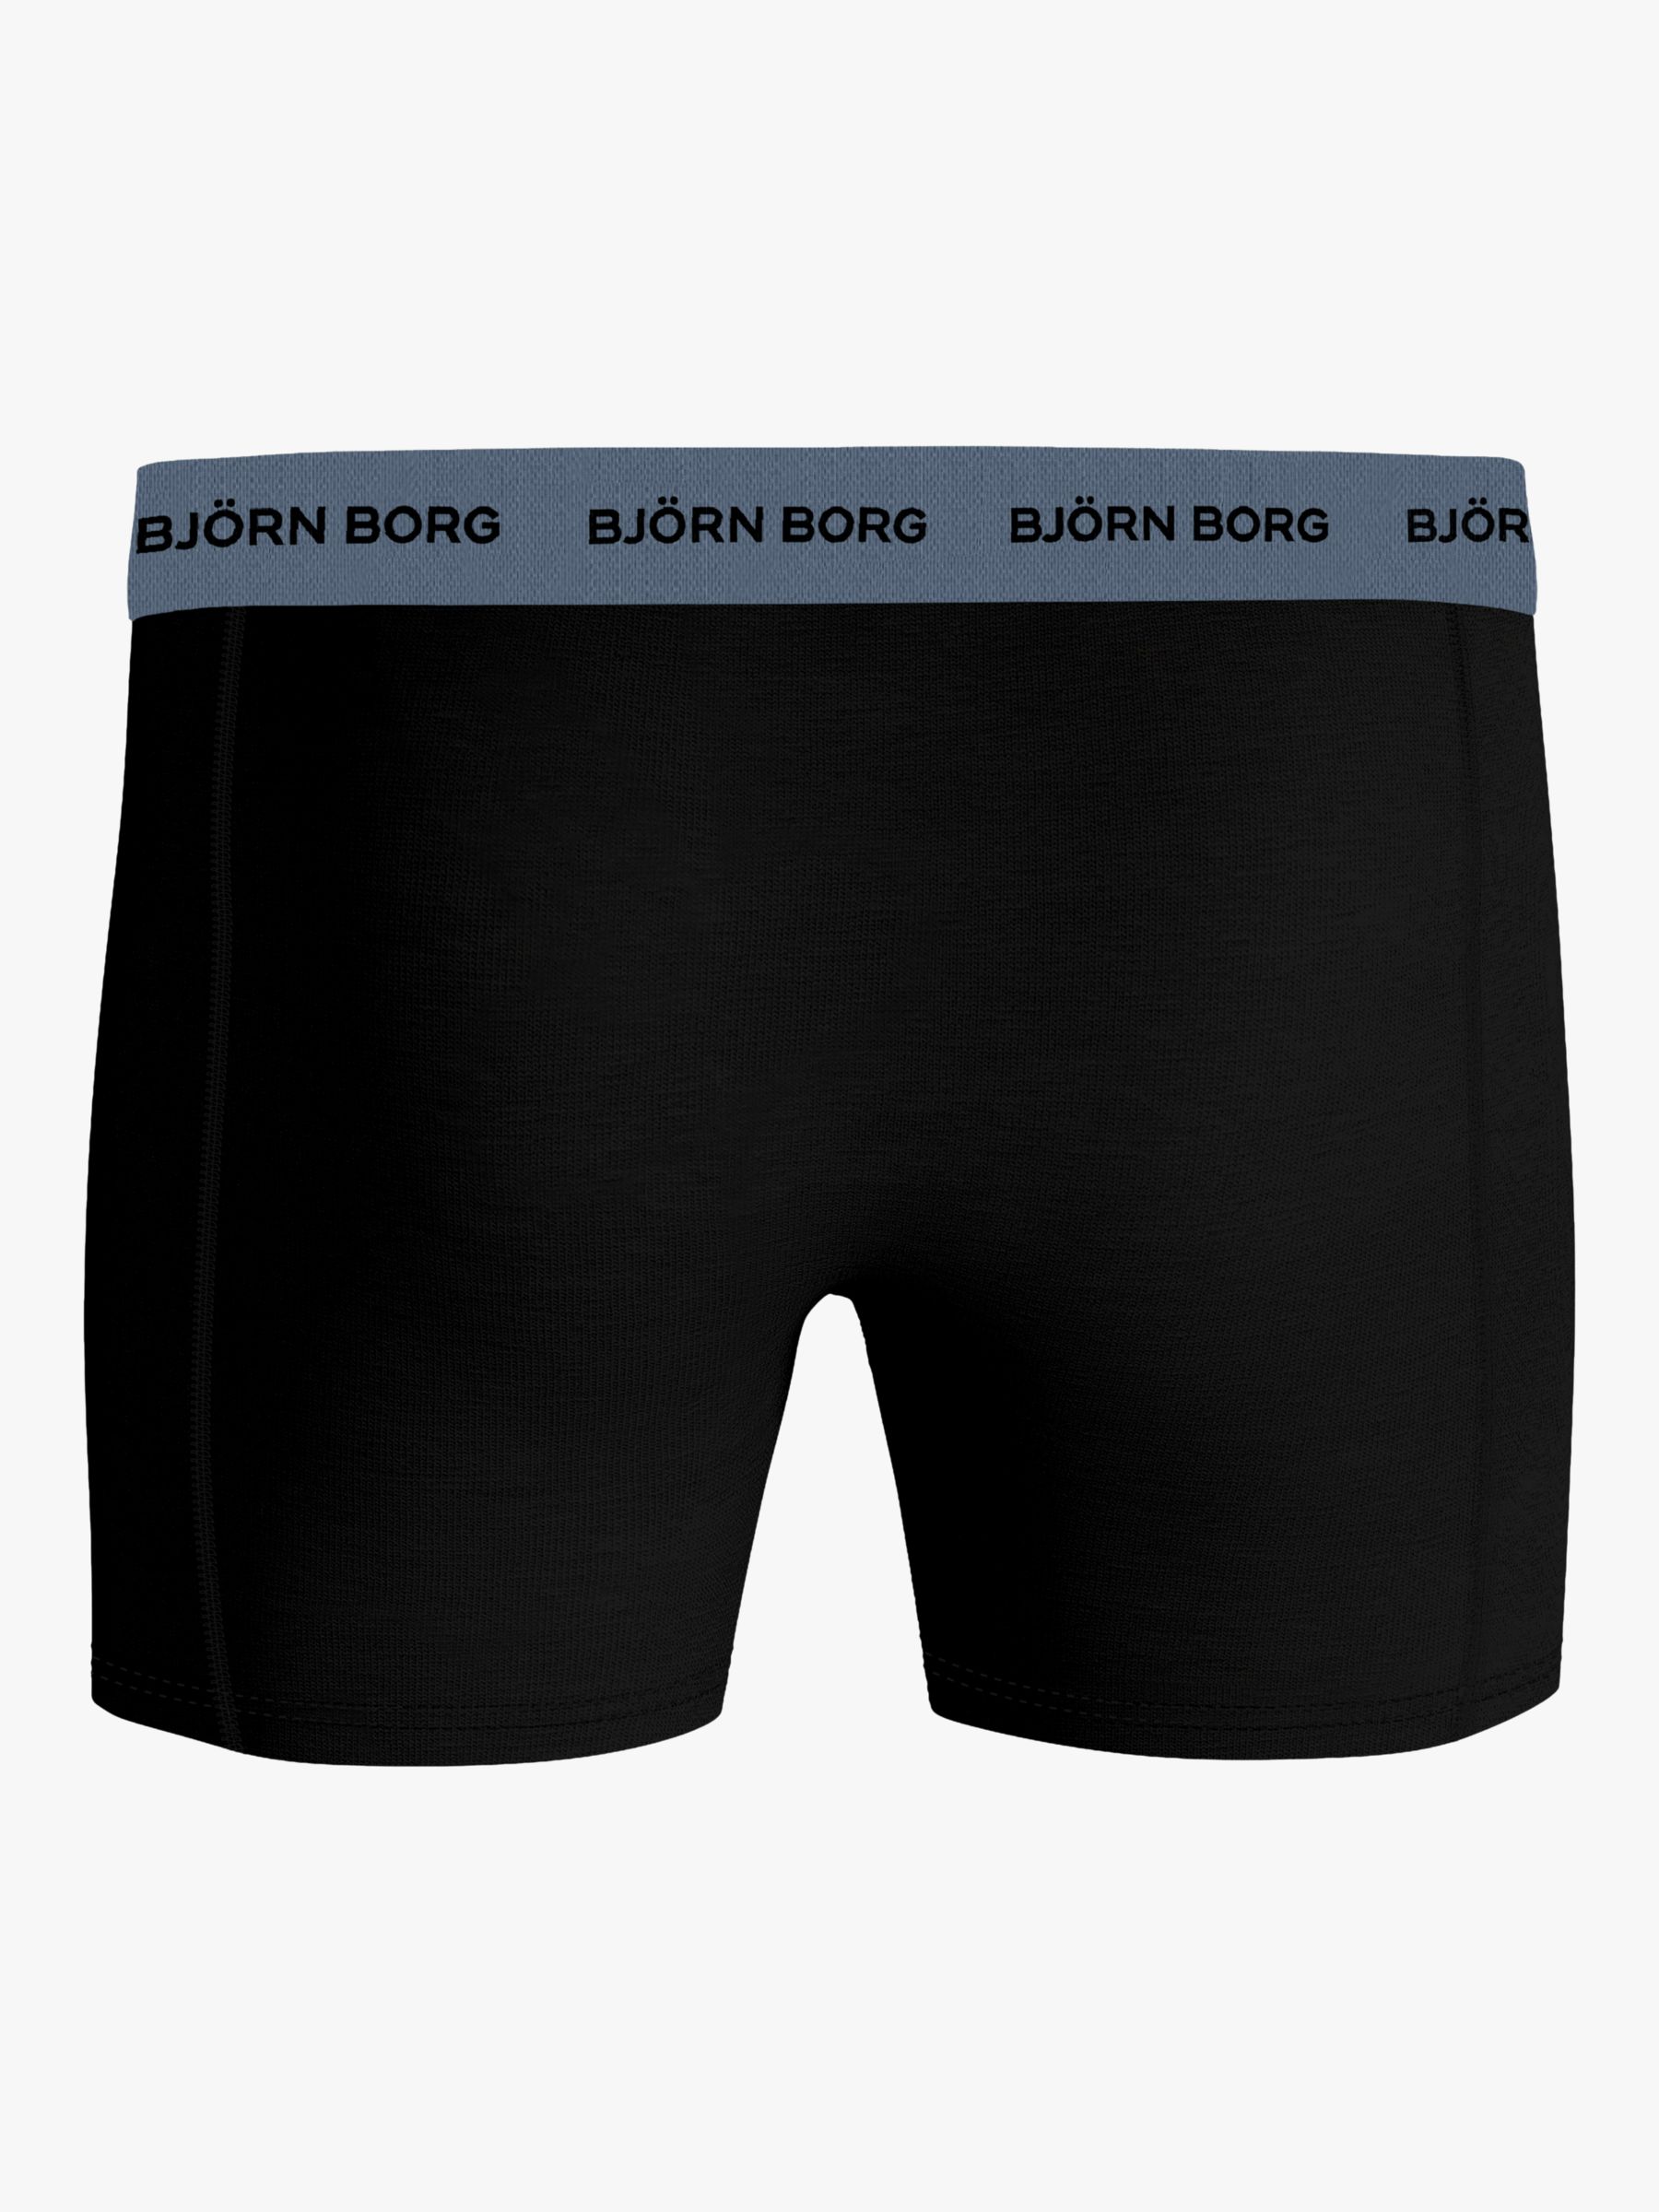 Buy Björn Borg Cotton Blend Stretch Trunks, Pack of 3, Black/Navy Online at johnlewis.com